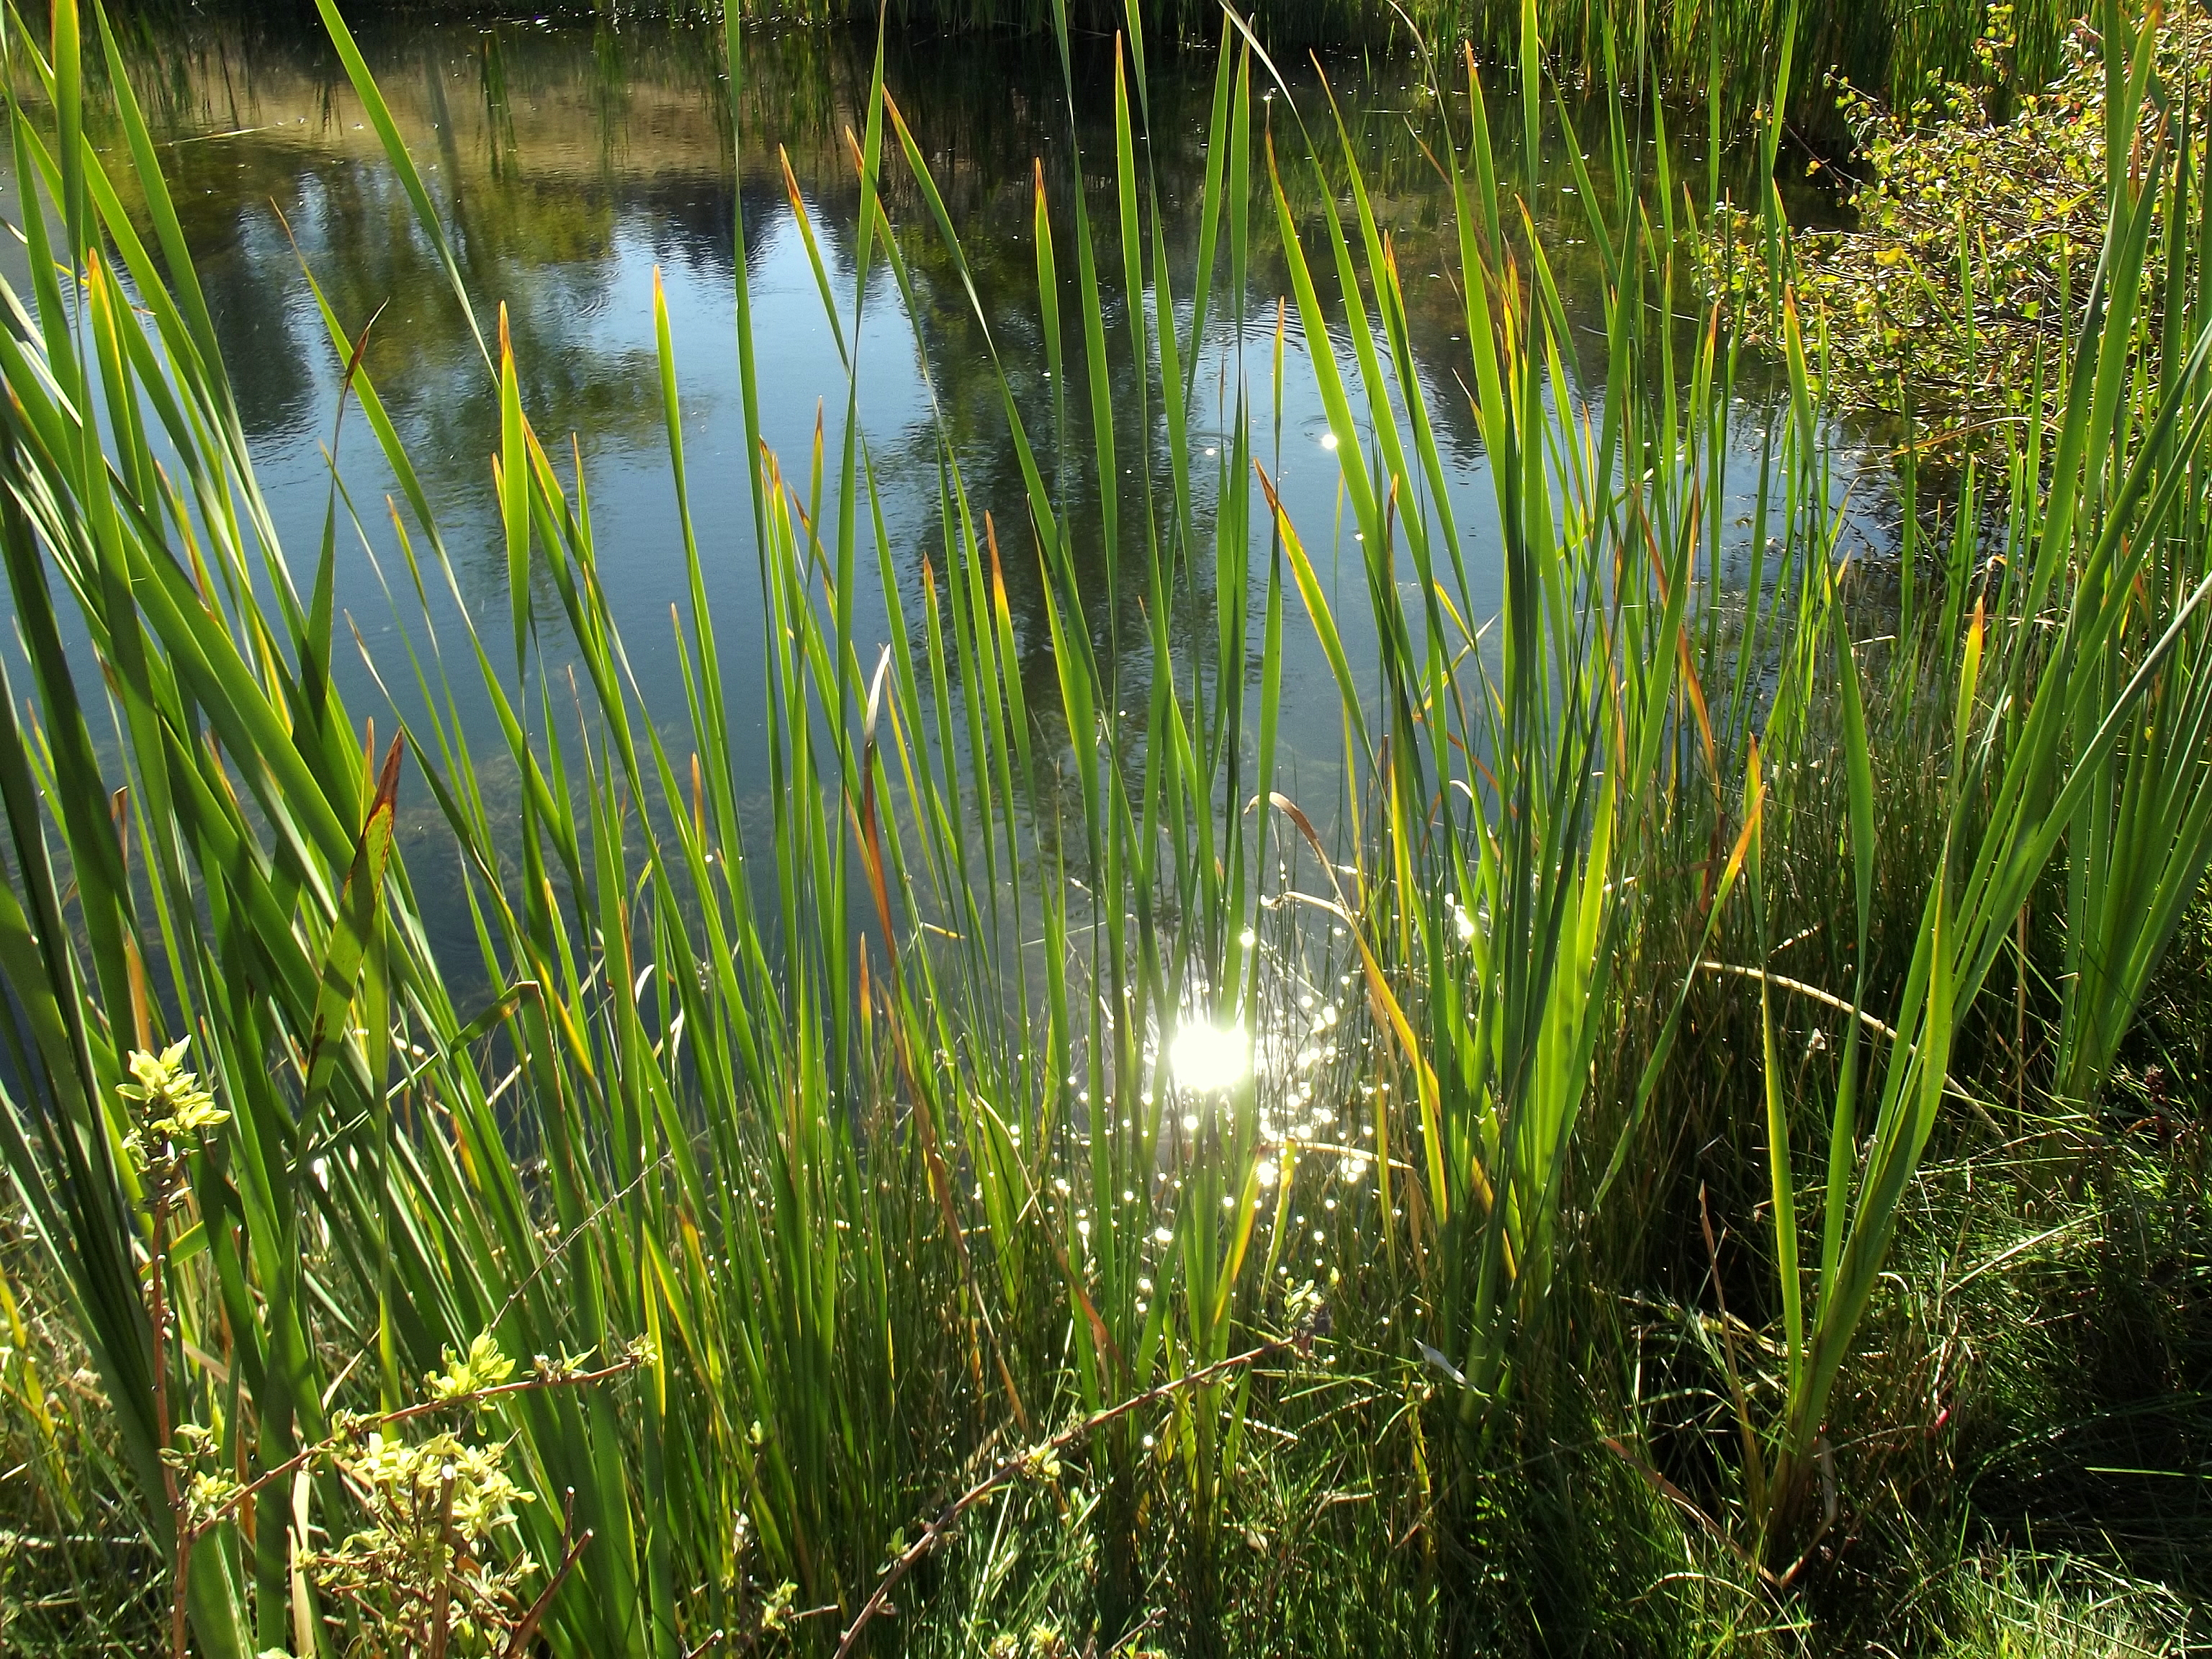 File:Pond, cattail grass, sunlight.JPG - Wikimedia Commons